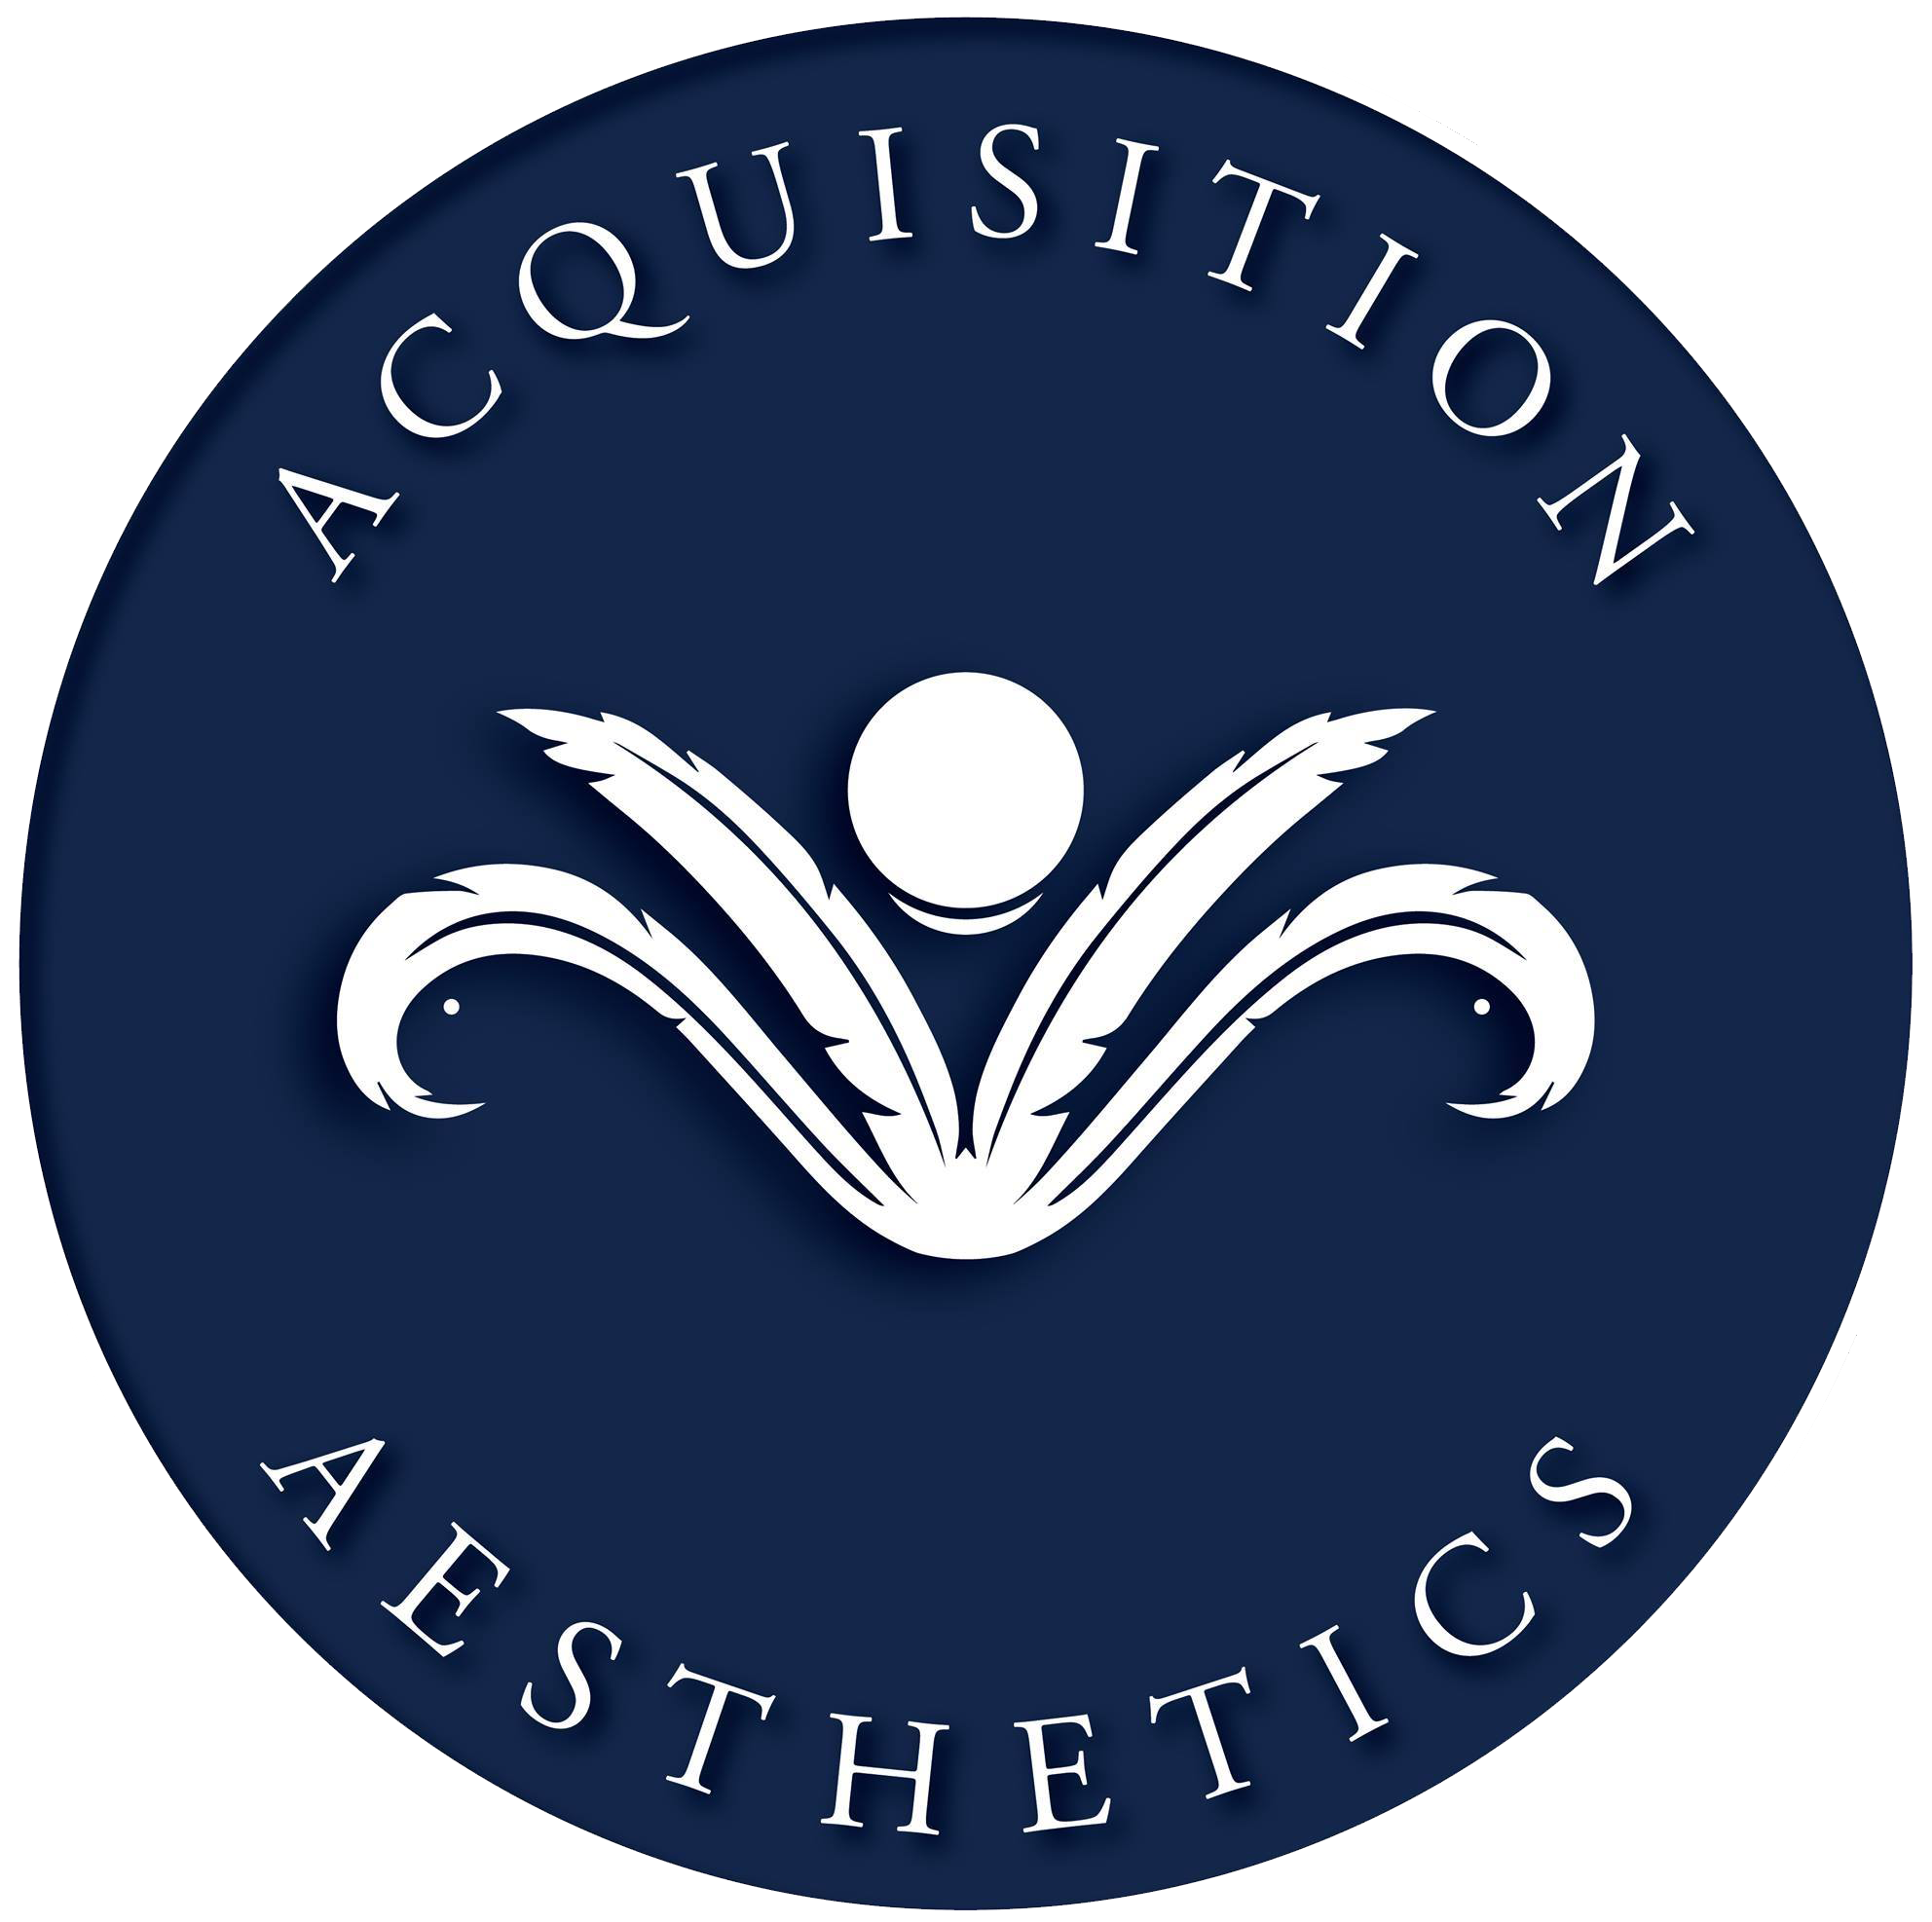 Acquisition Aesthetics